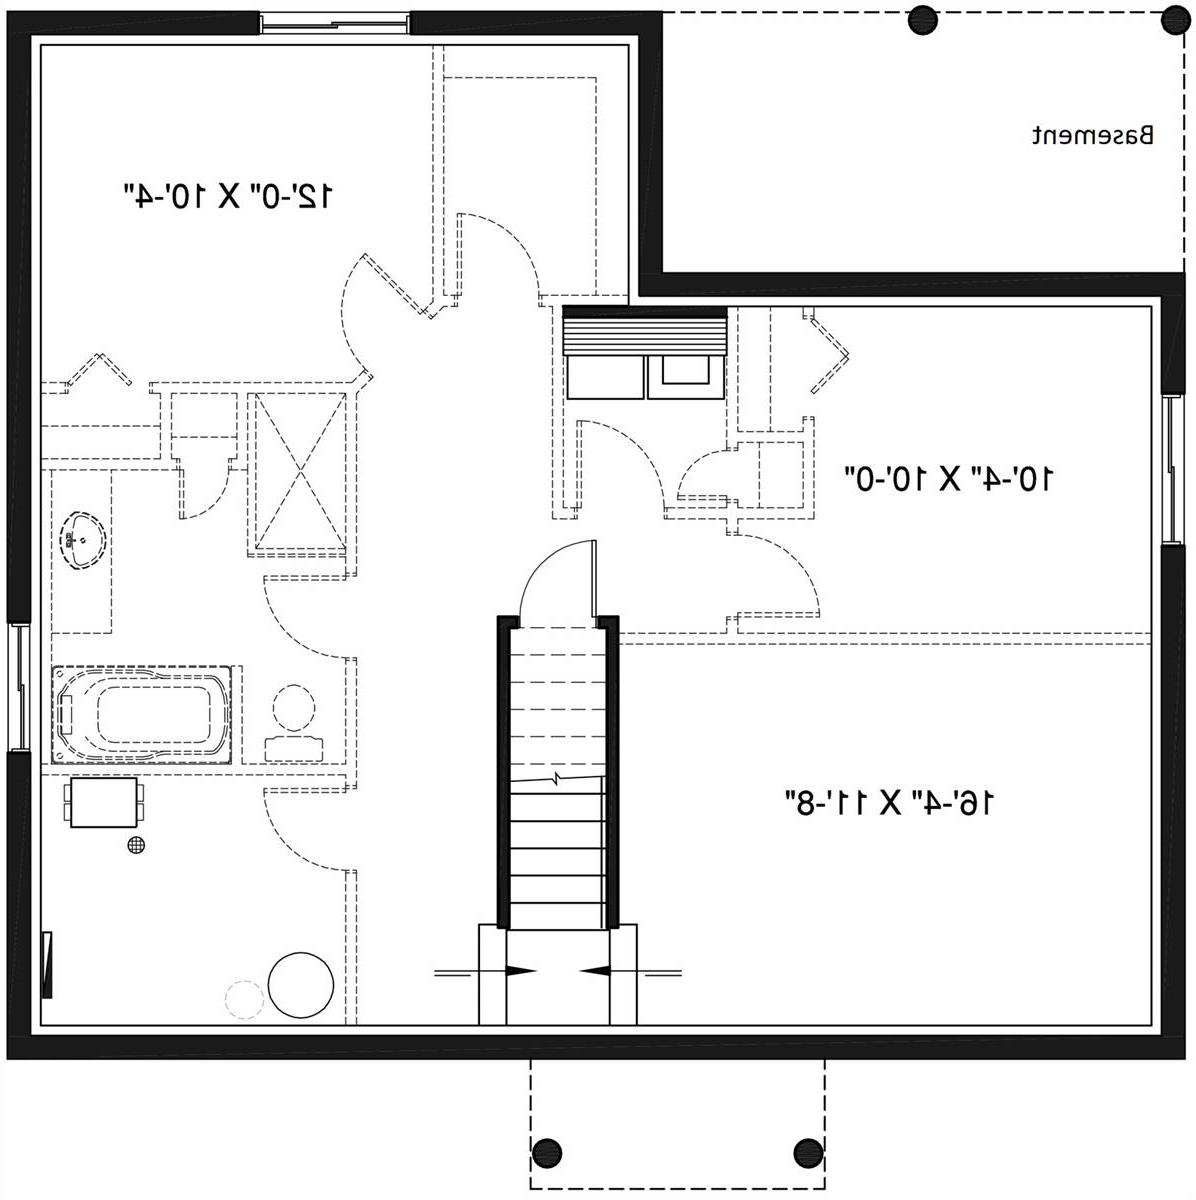 Basement image of Miranda 5 House Plan